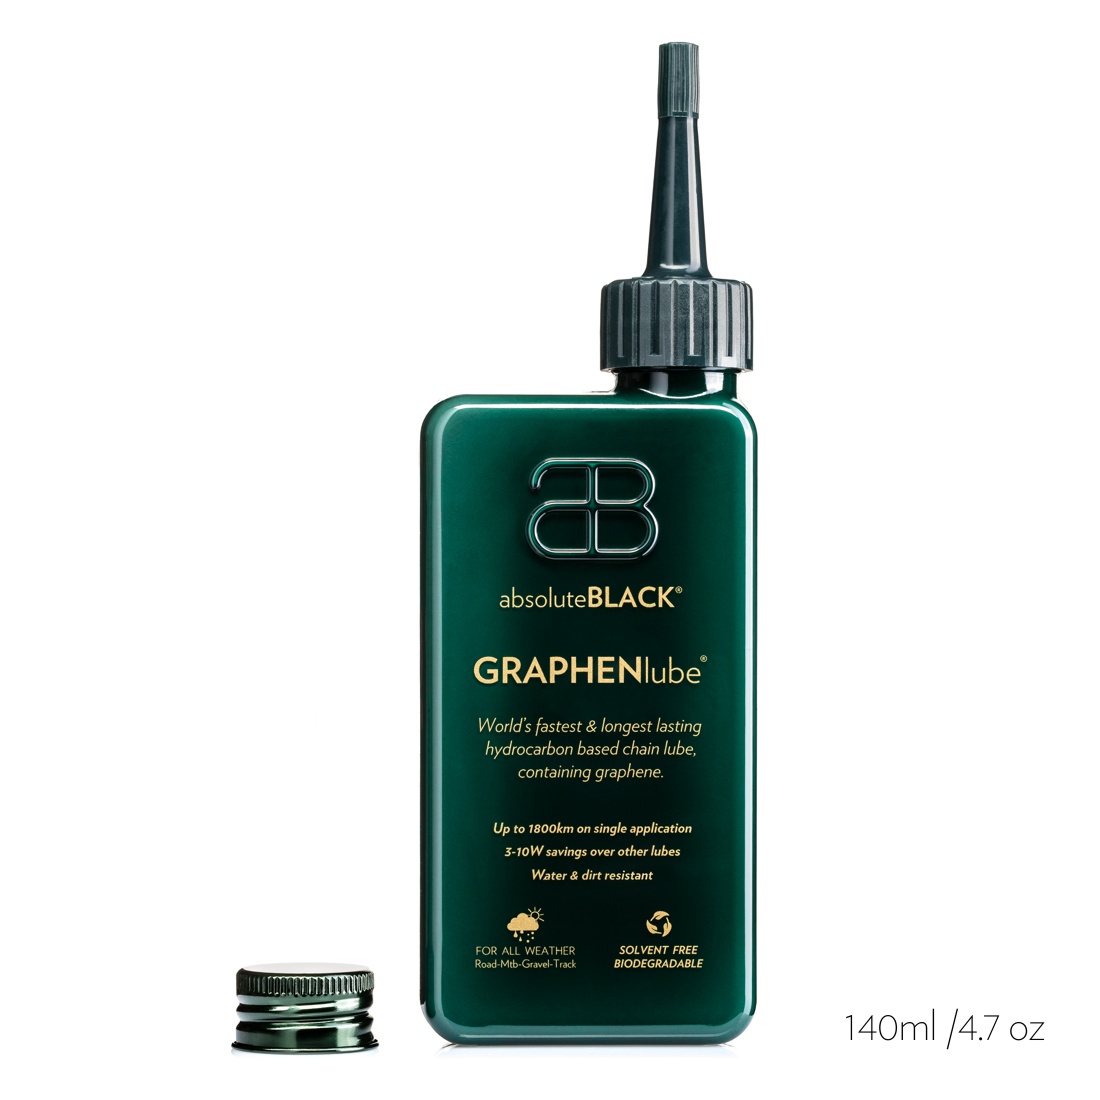 Graphen lube worlds best graphene based wax chain lubricant